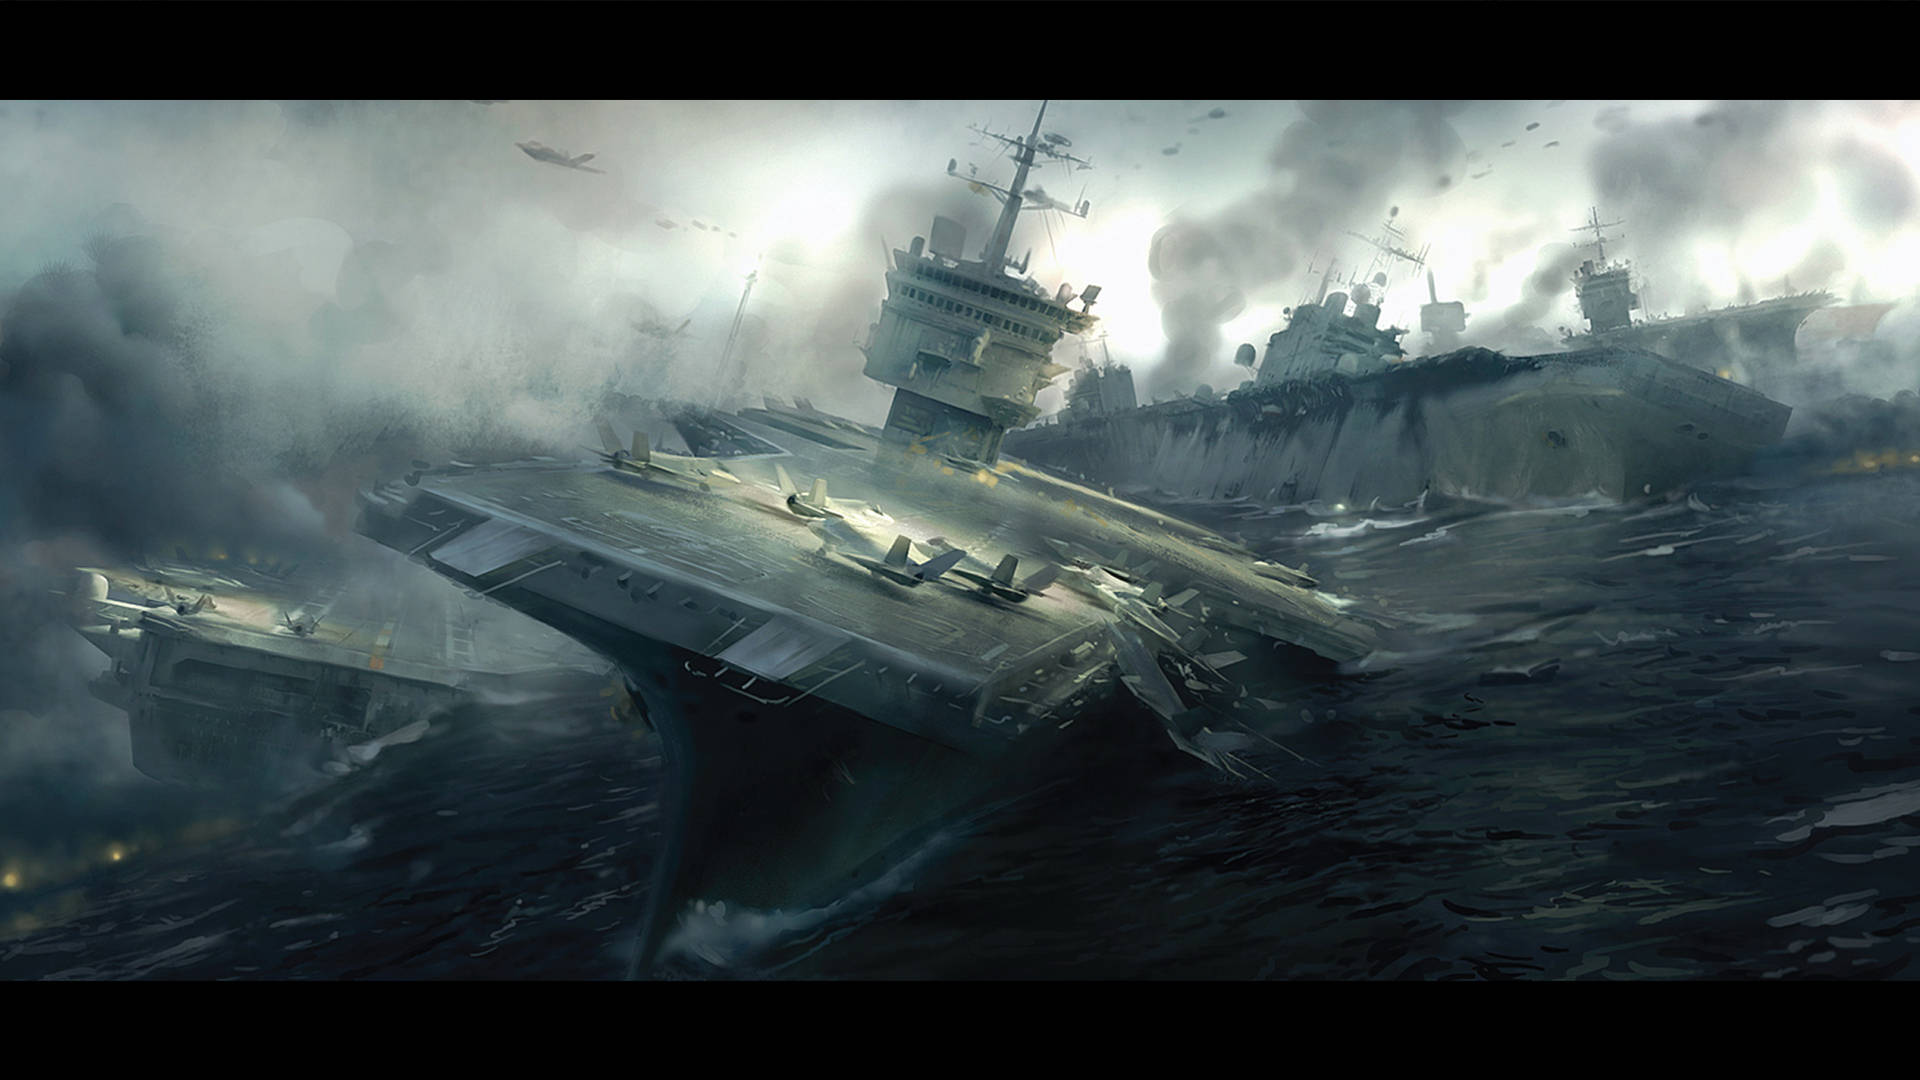 Cool Battlefield 3 Ships At Sea Wallpaper